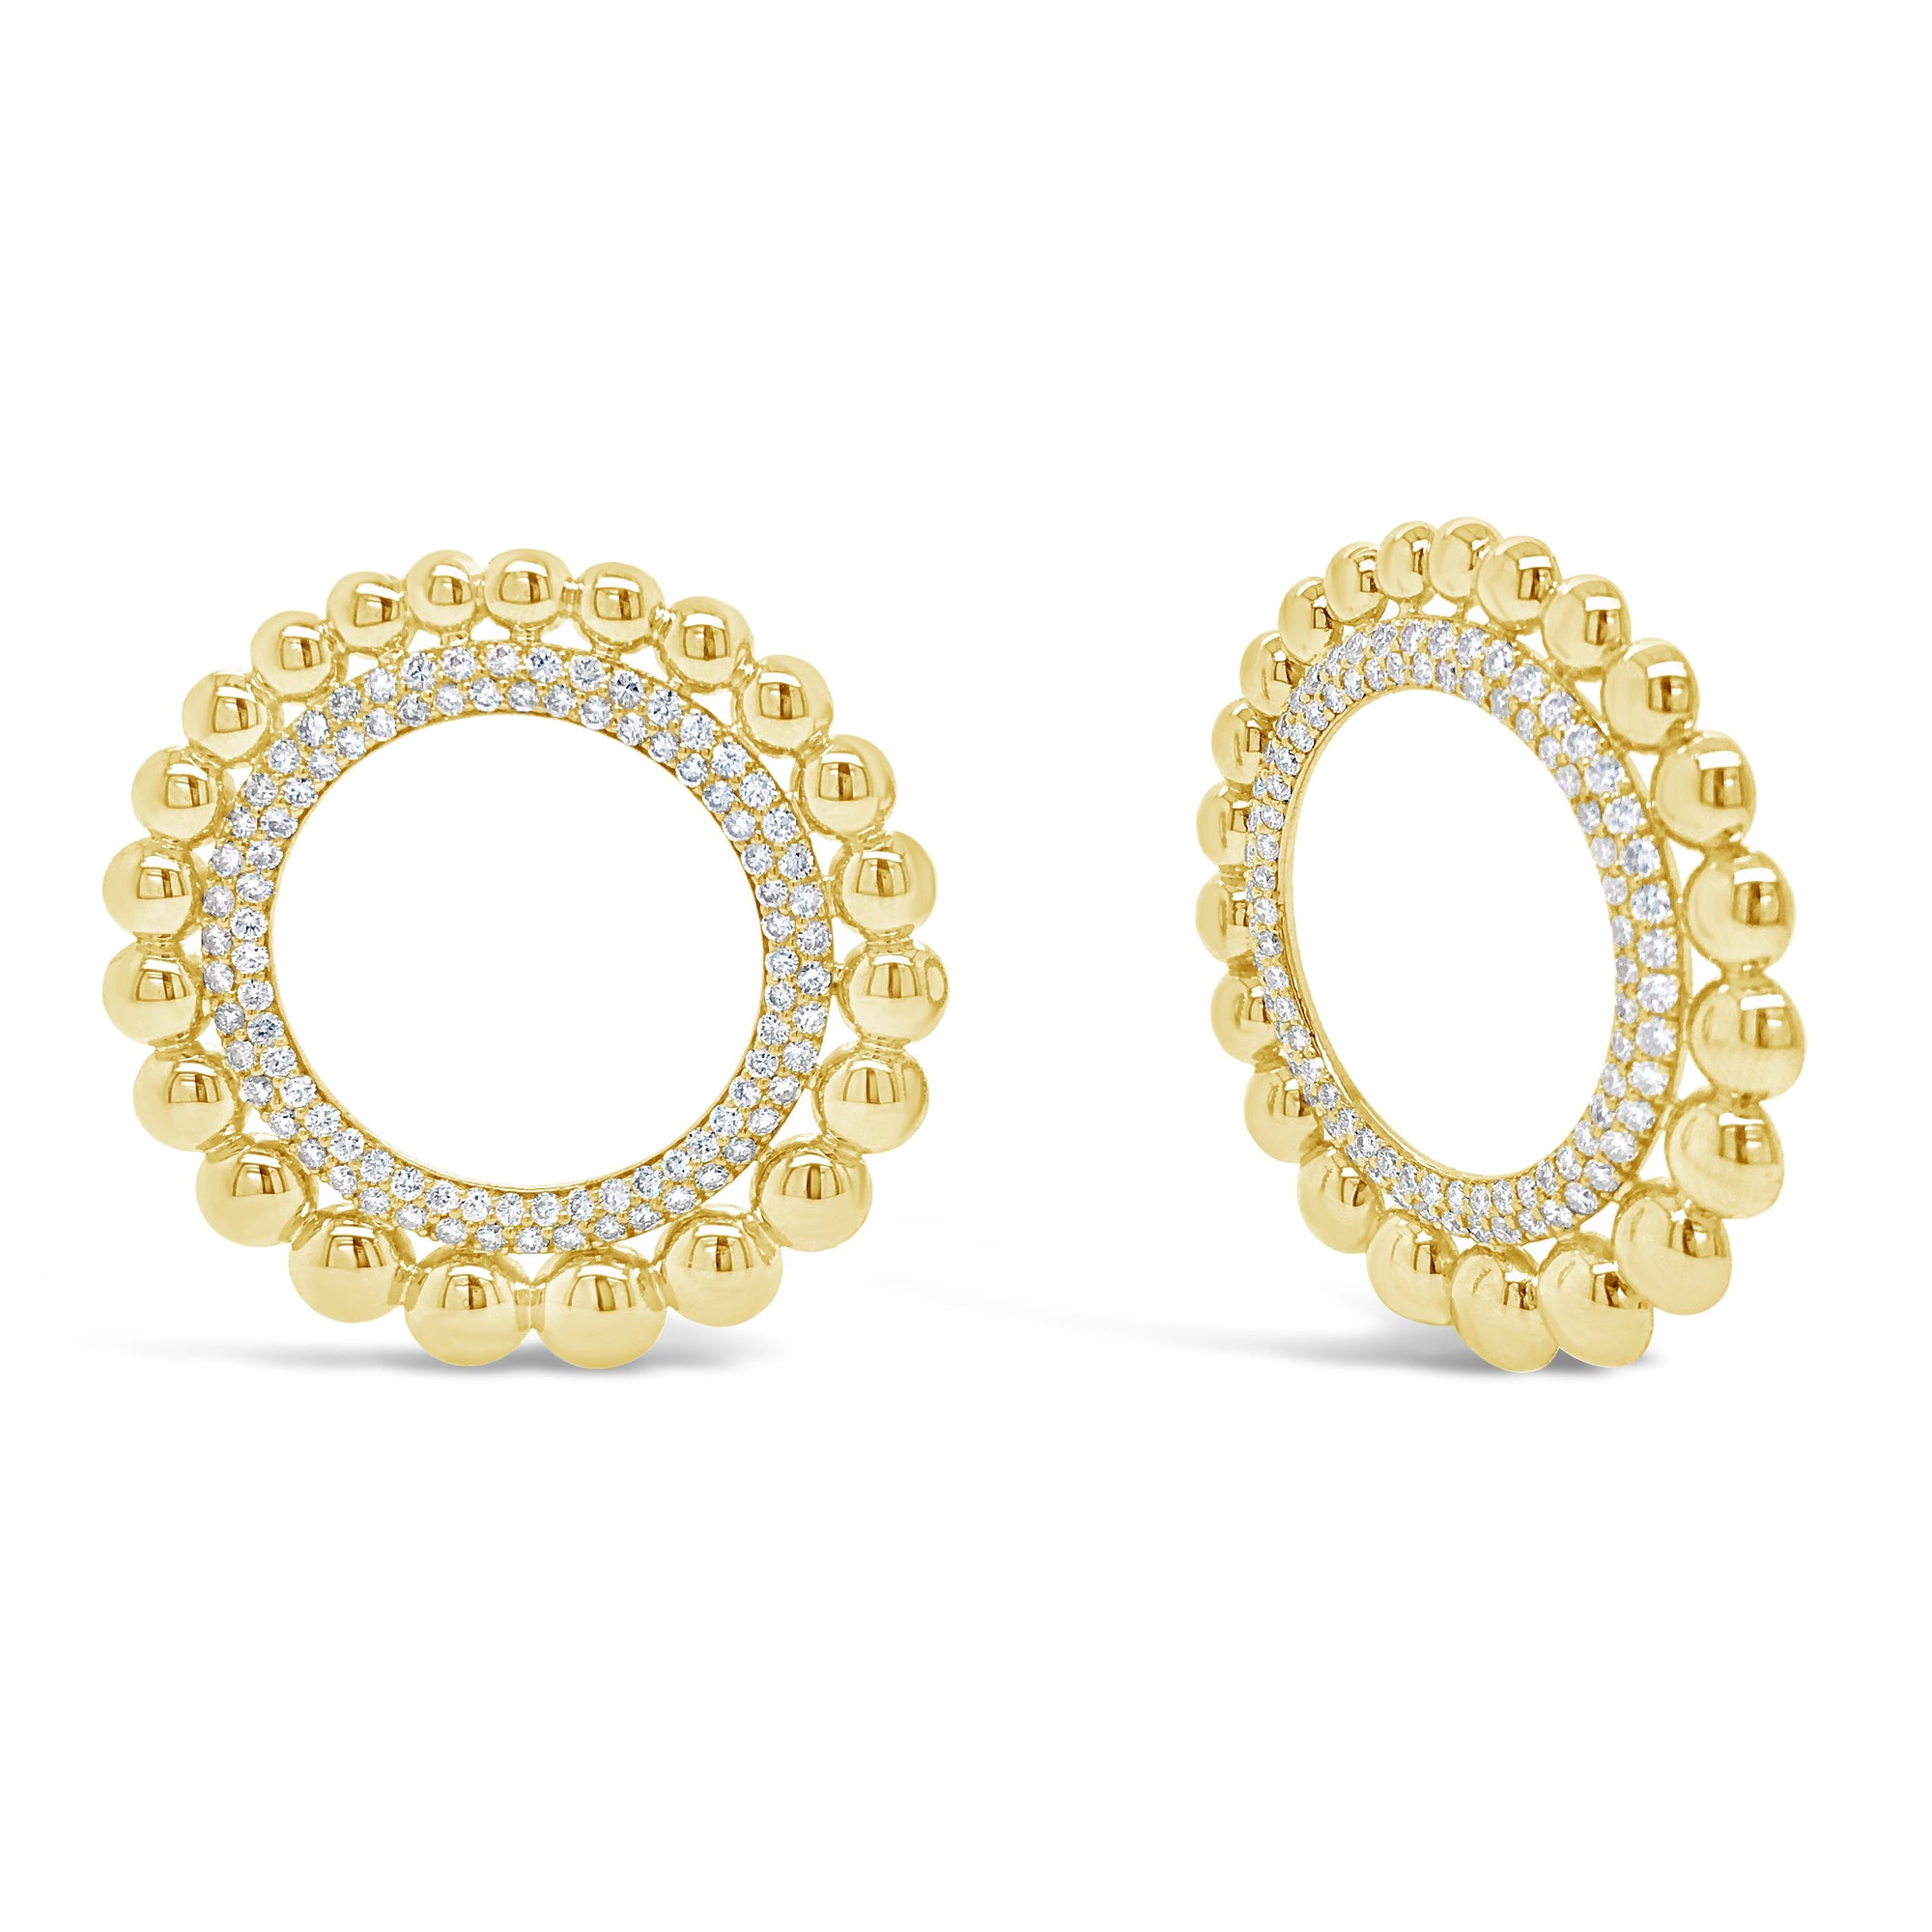 Diamond & Gold Beaded Circle Earrings  -14K gold weighing 14.2 grams  -188 round diamonds totaling 3.00 carats